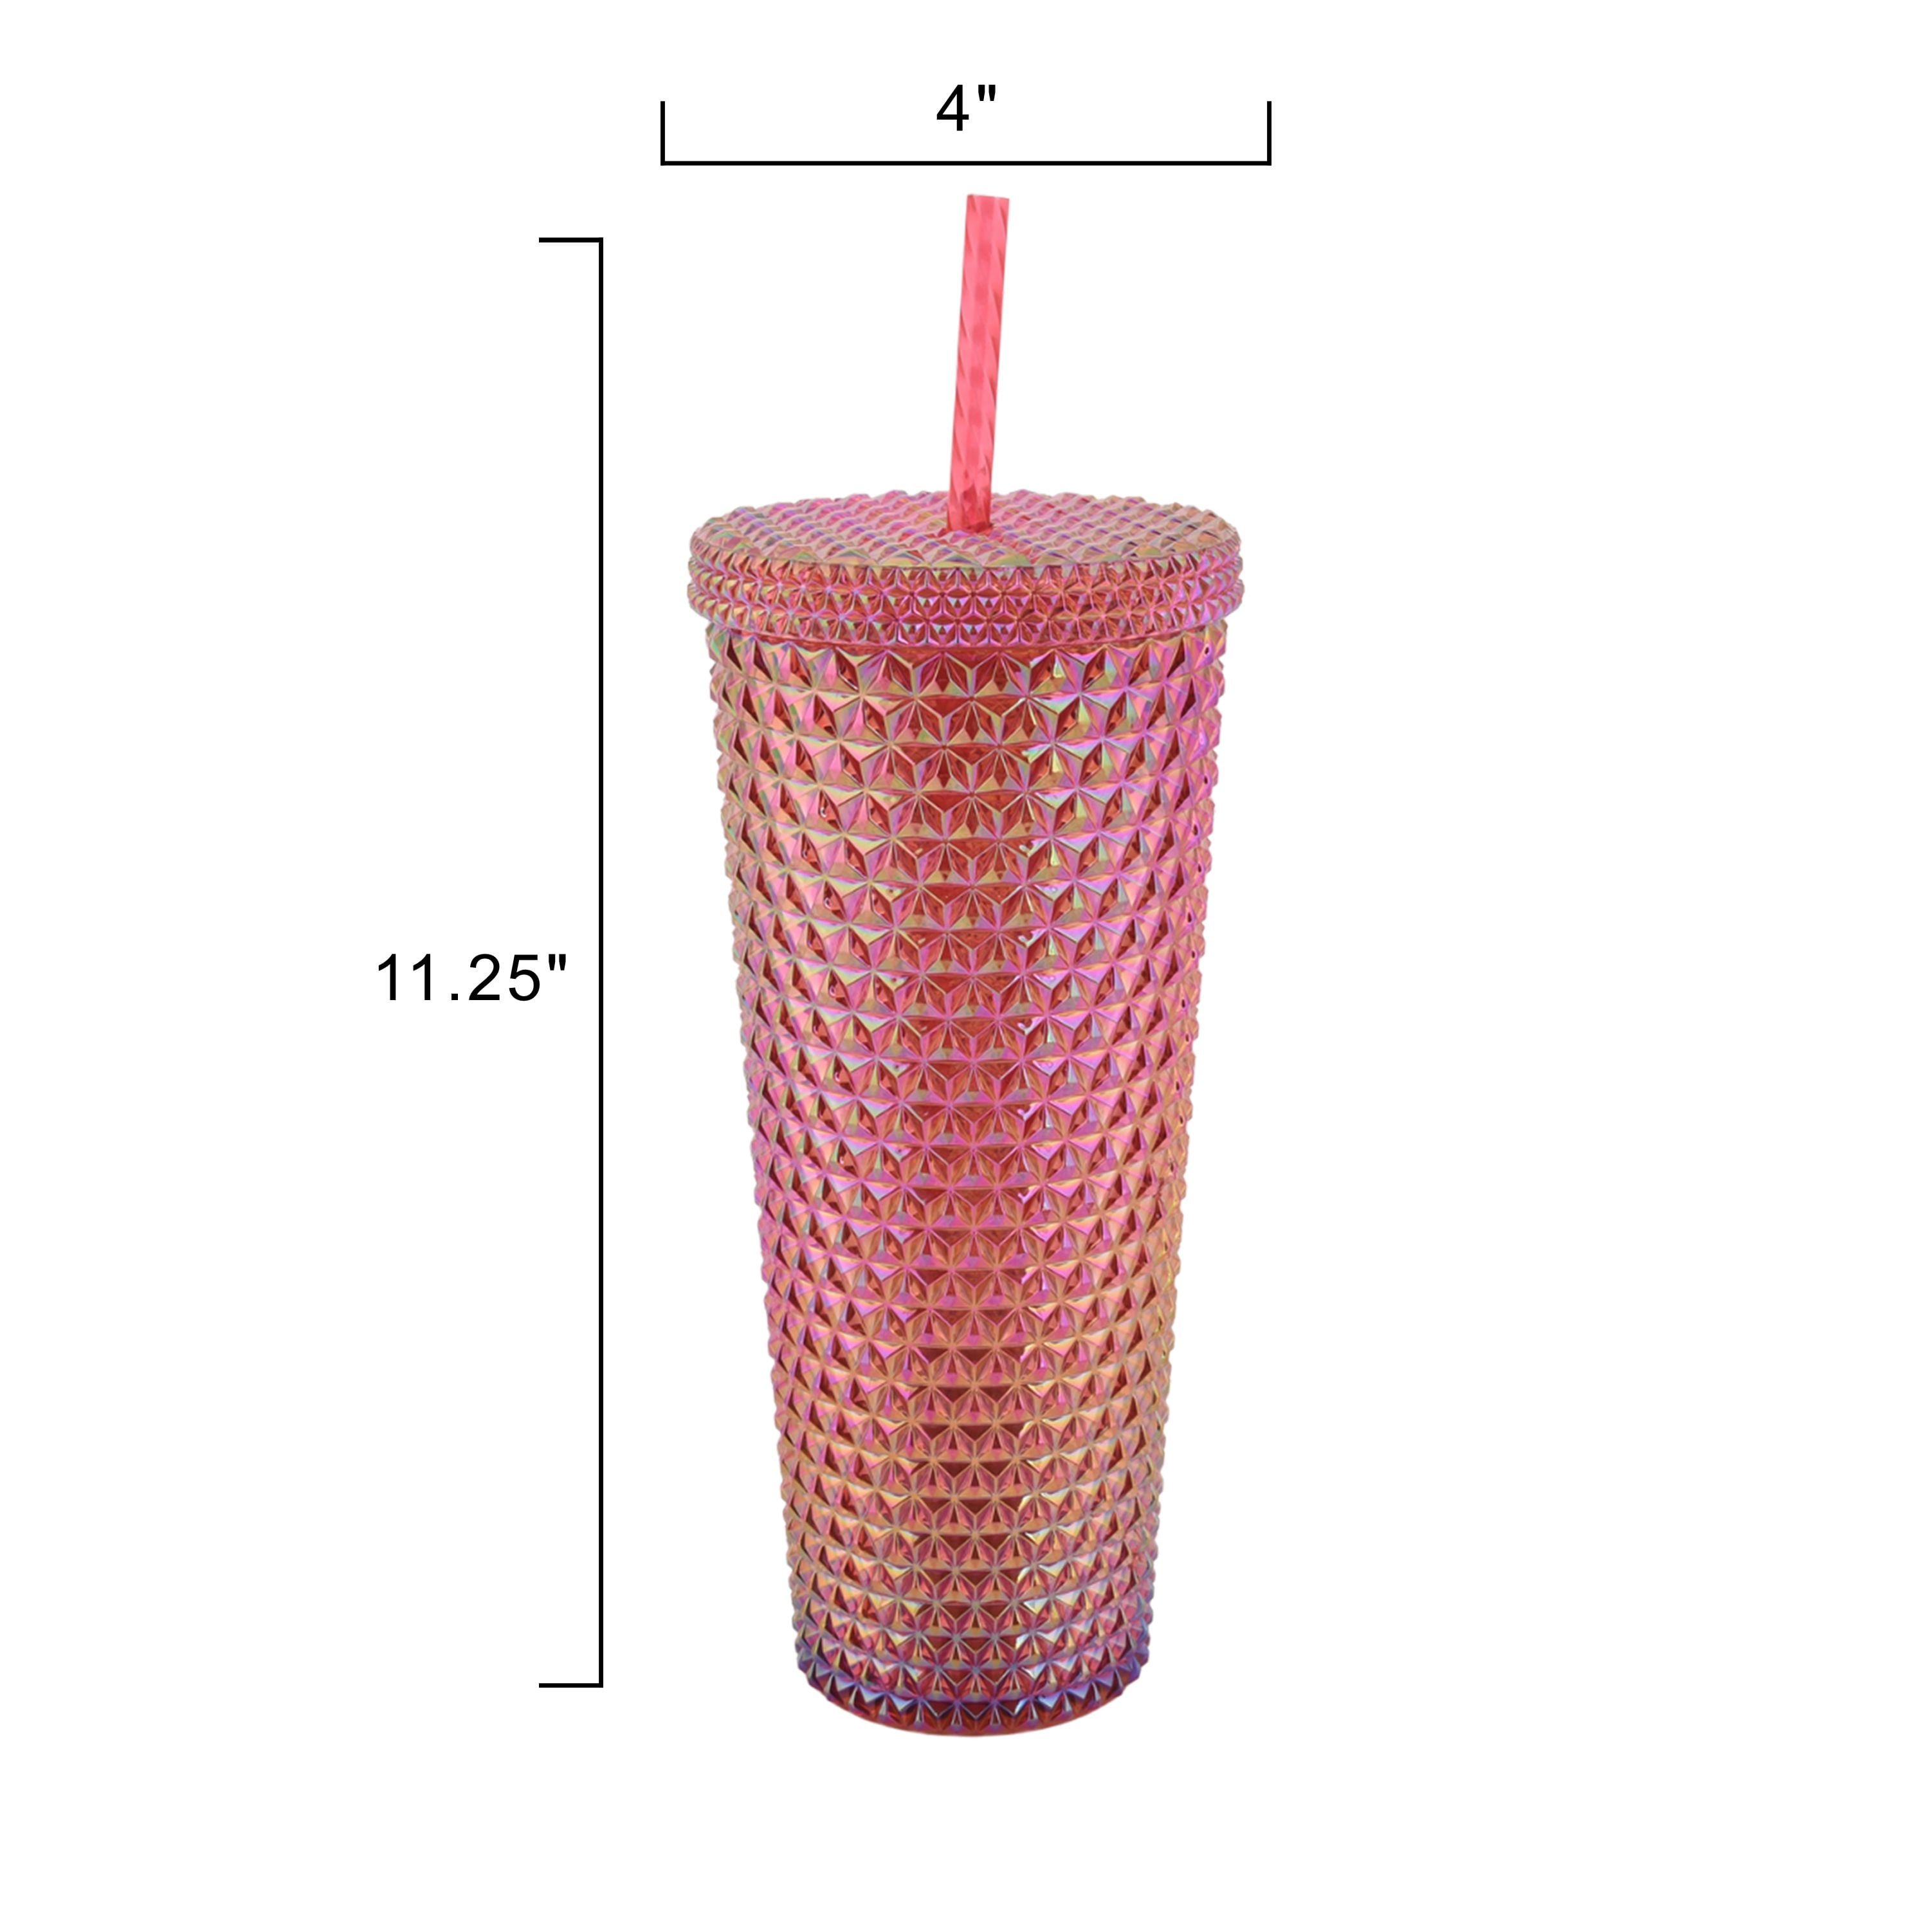 600ml/20oz Coffee Making Contigo Plastic Sippy Cup (Starbucks